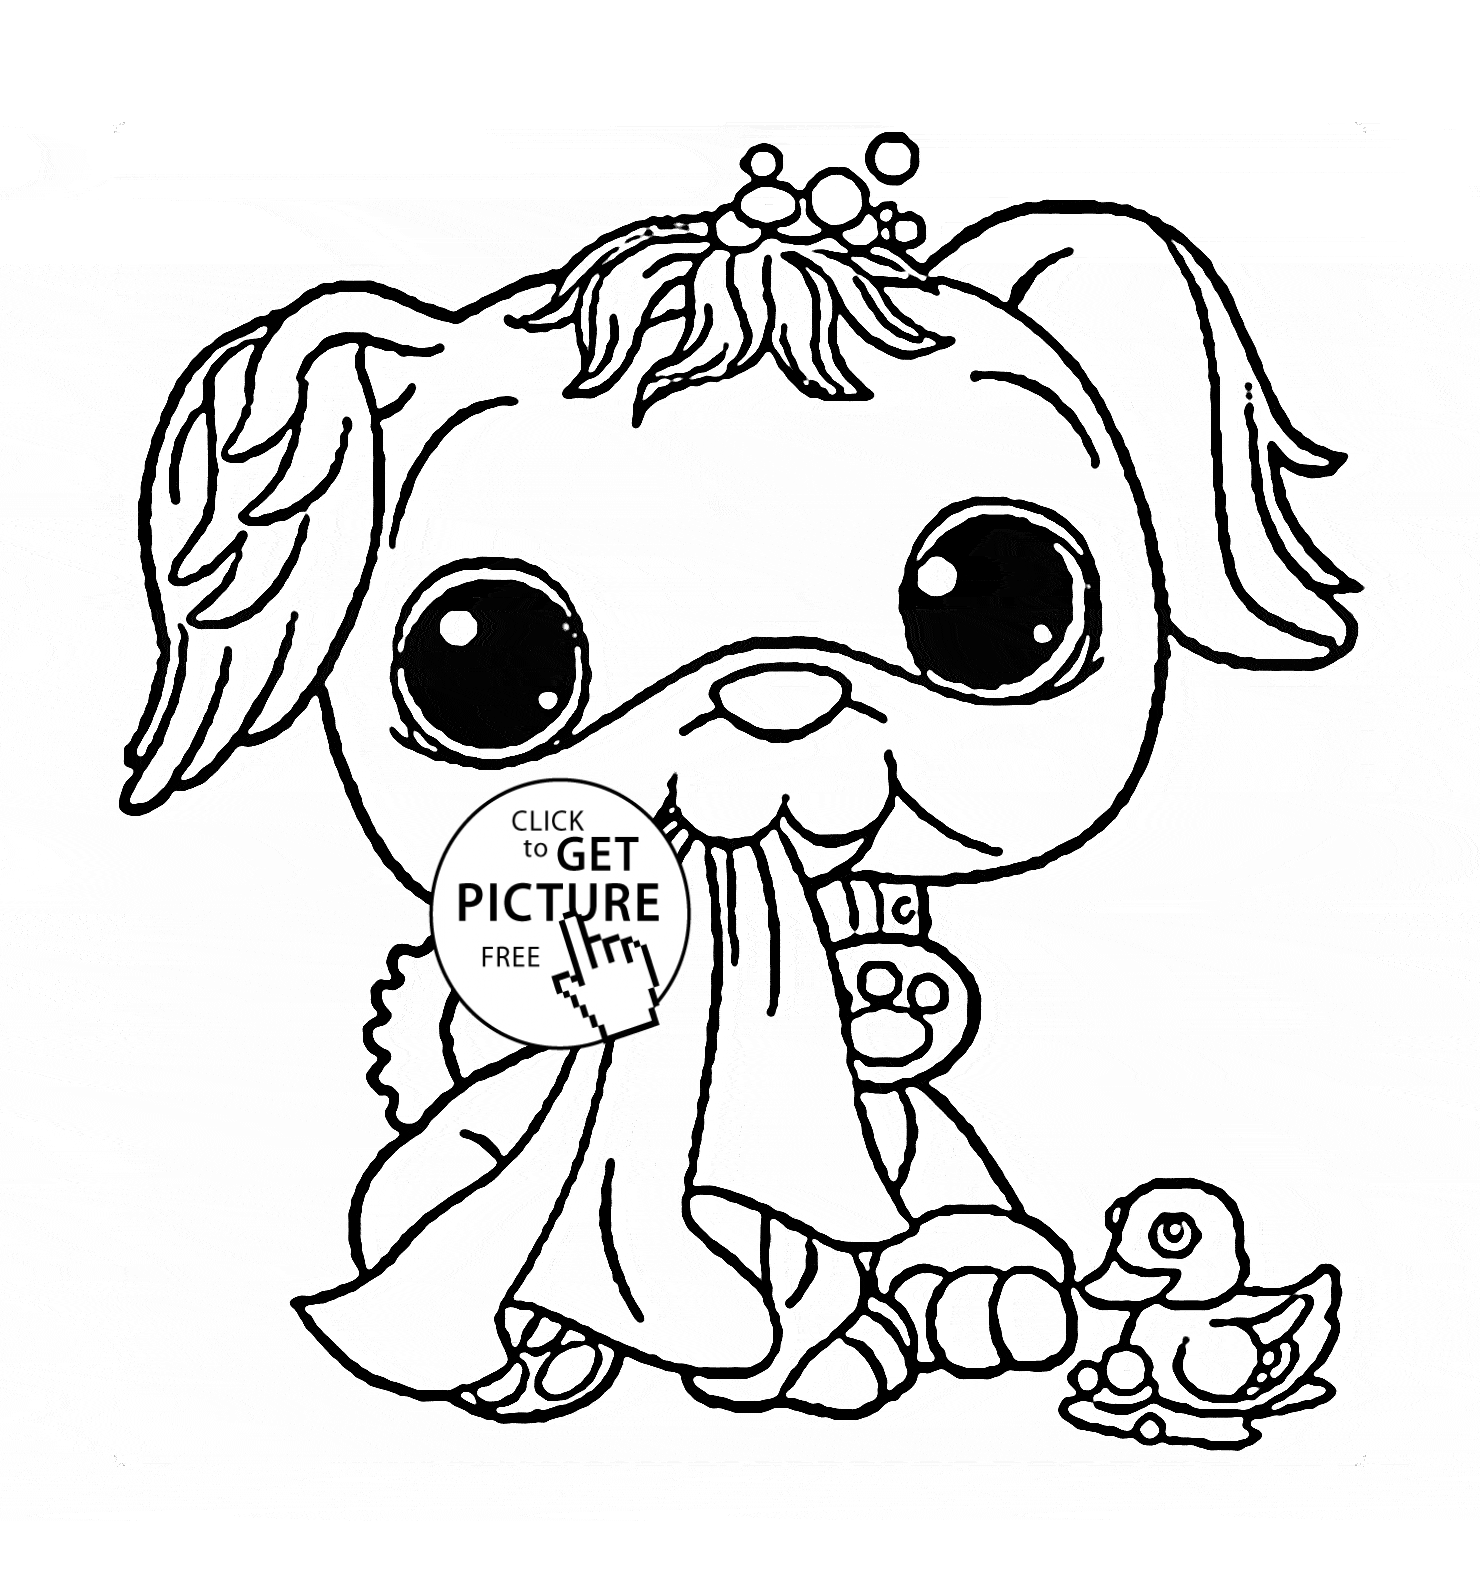 Littlest Pet Shop Funny Dog coloring page for kids, animal ...